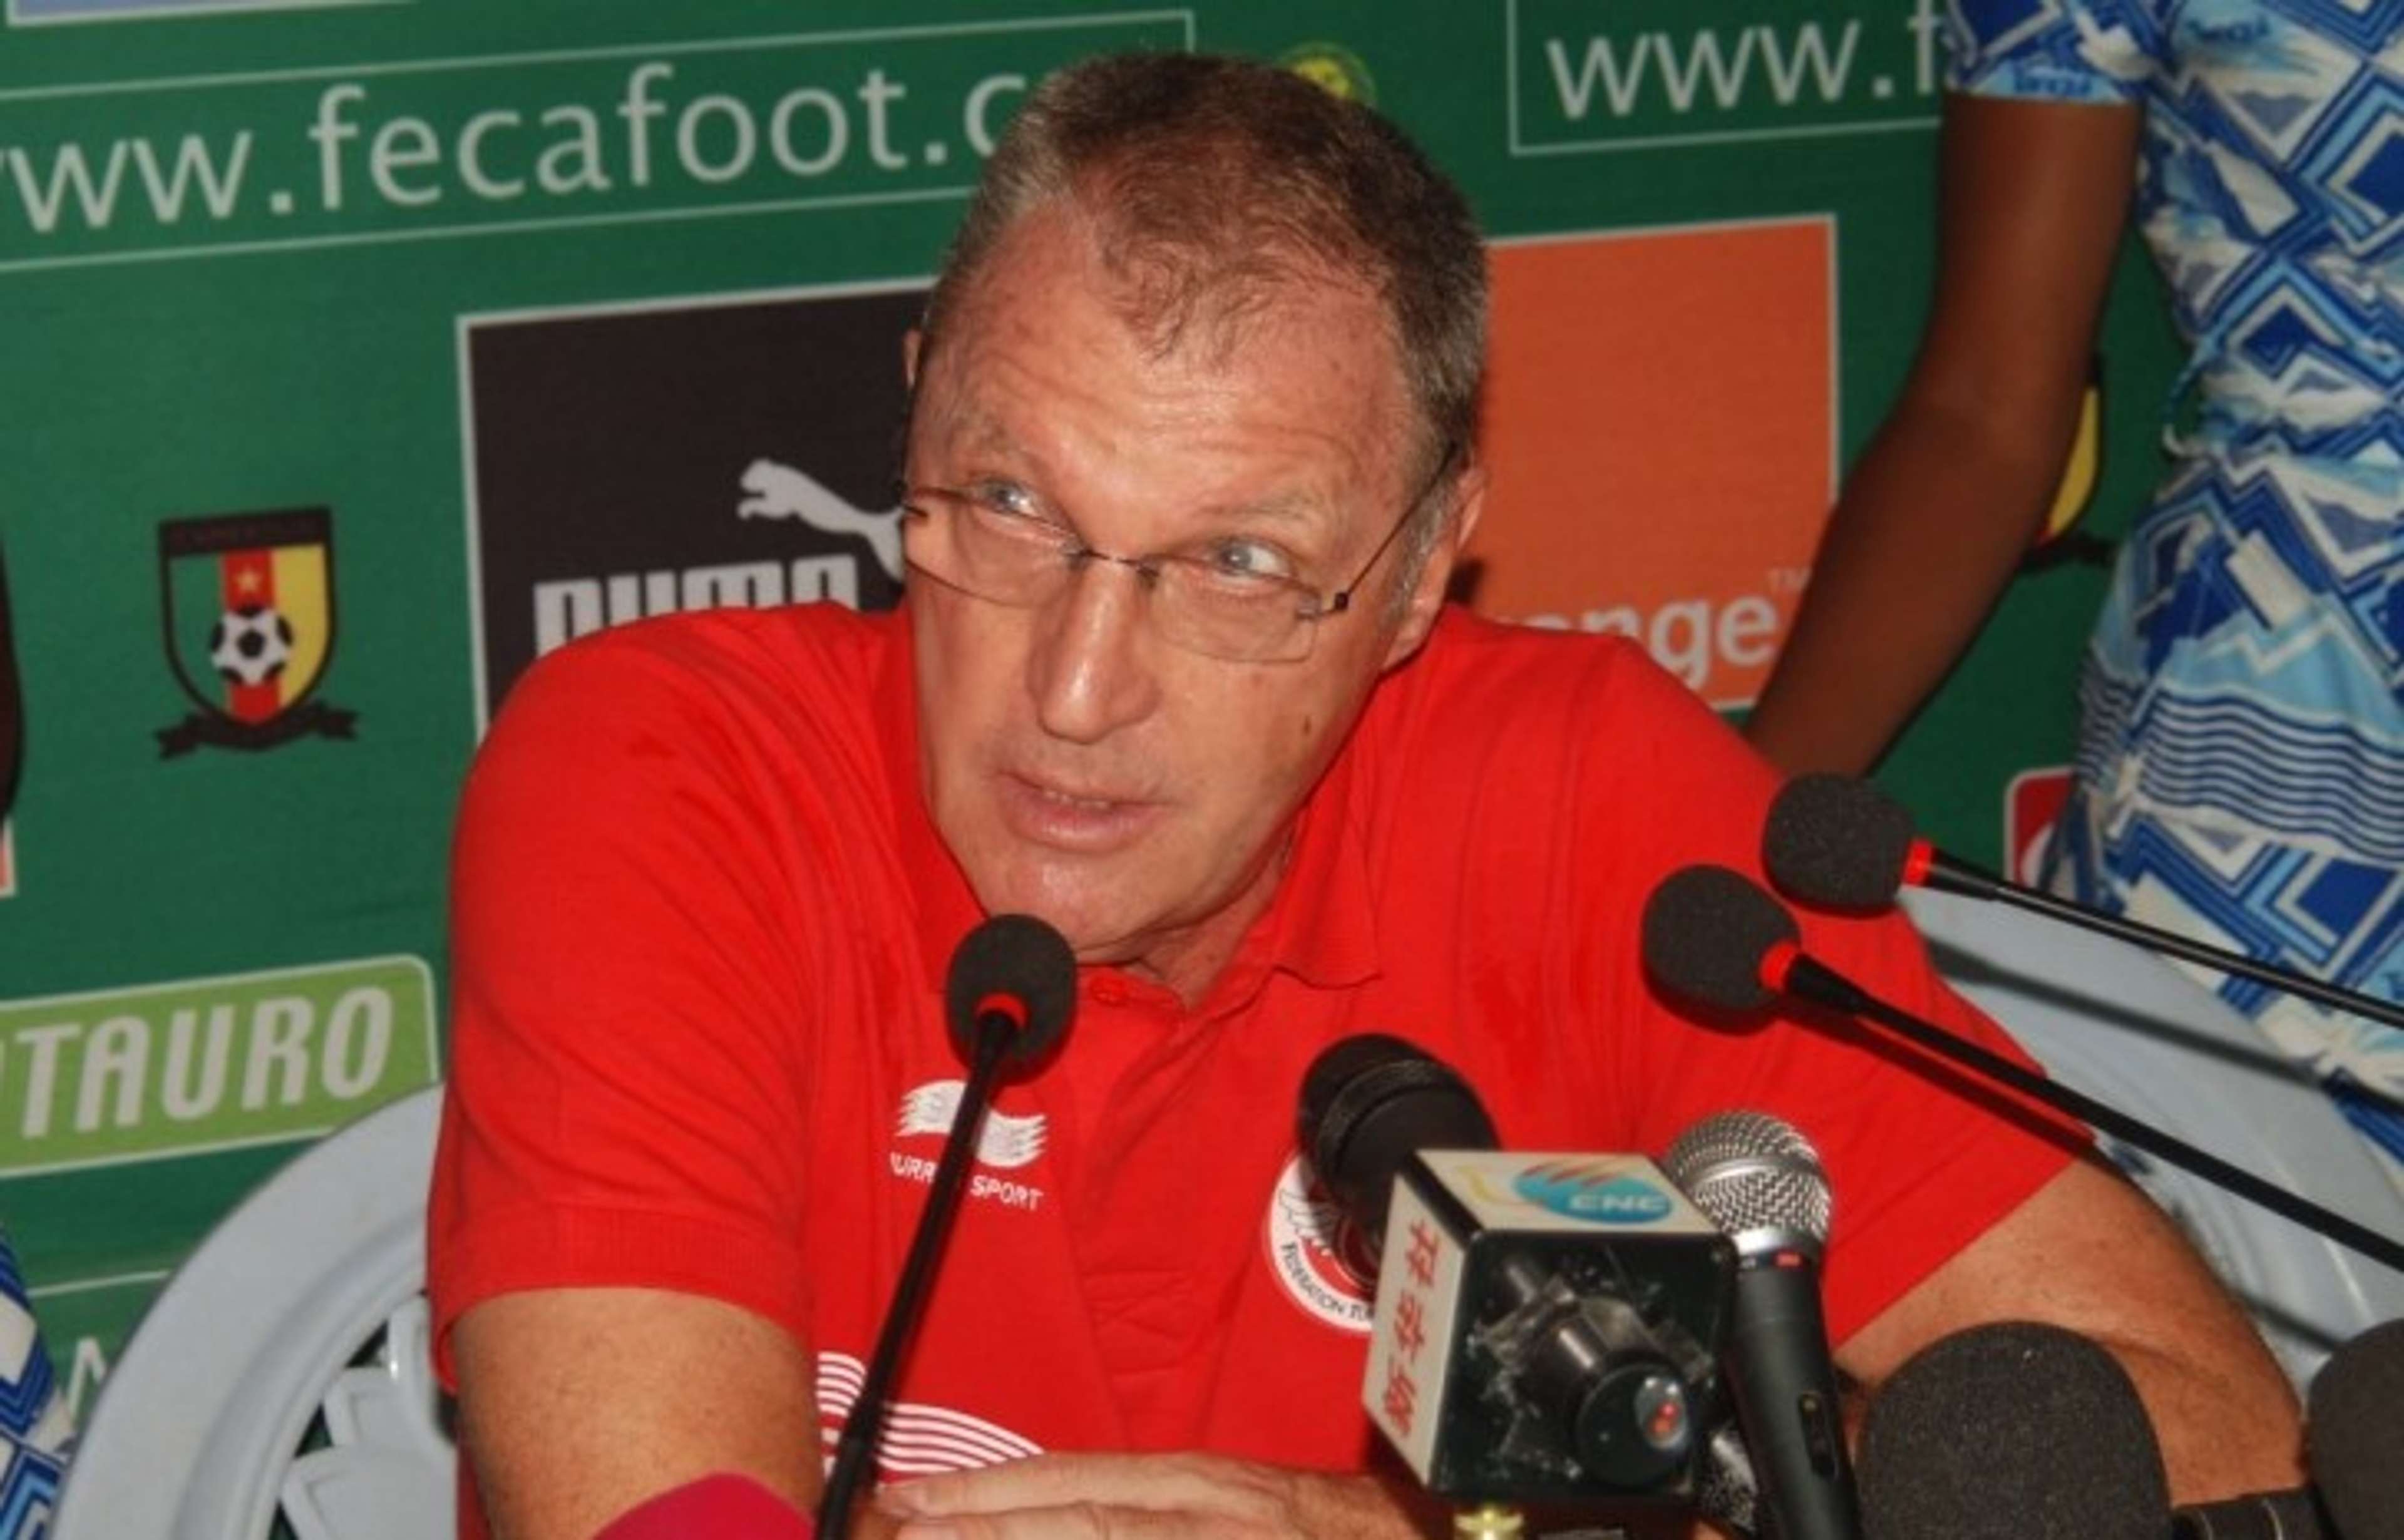 Ruud Krol, Tunisia coach